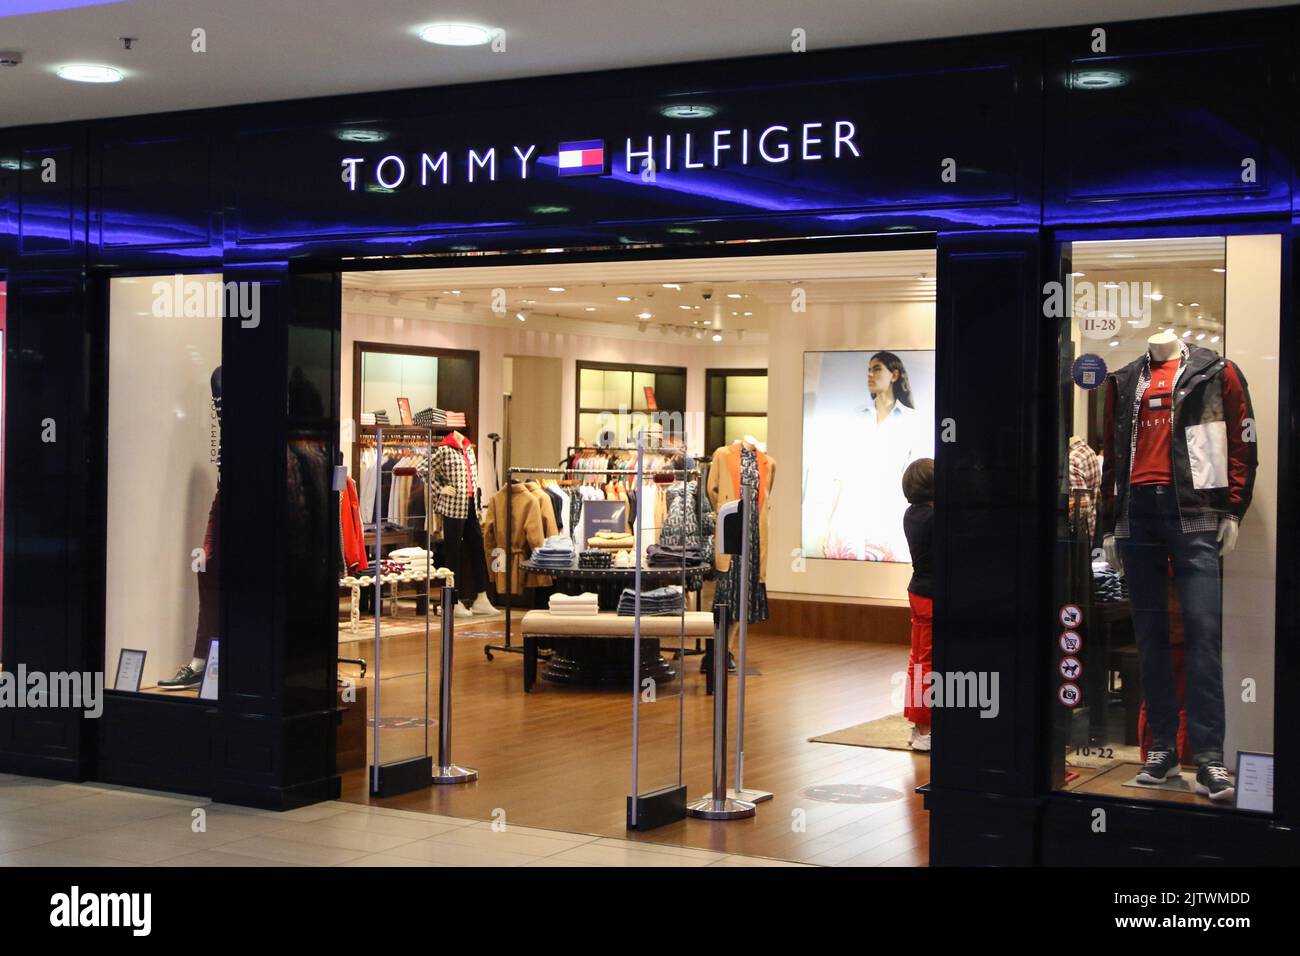 Find list of Tommy Hilfiger in Hyderabad - Tommy Hilfiger Stores